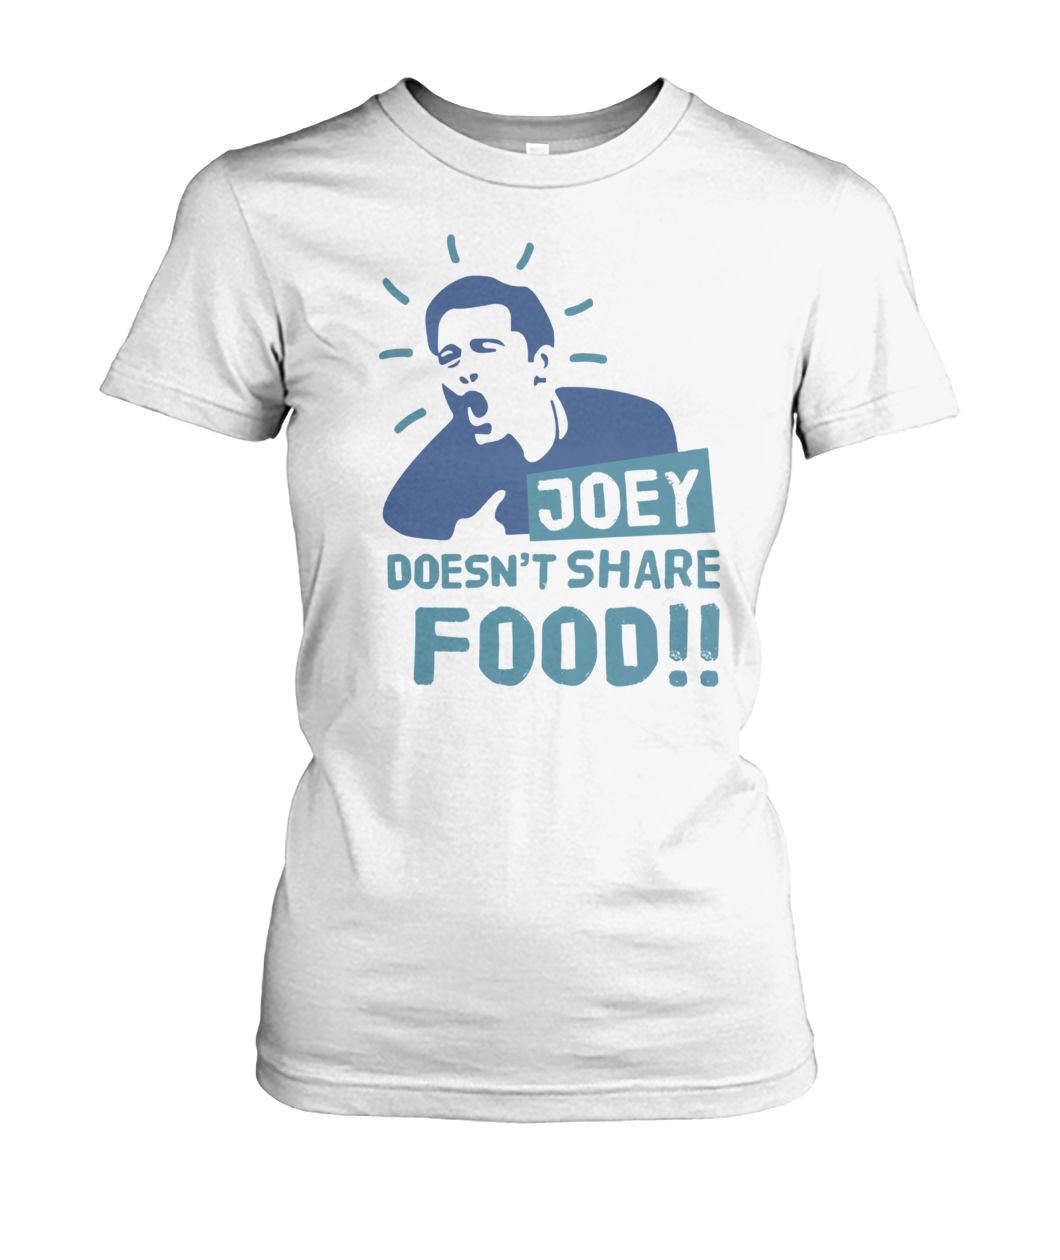 Joey doesn't share food friends tv show women's crew tee